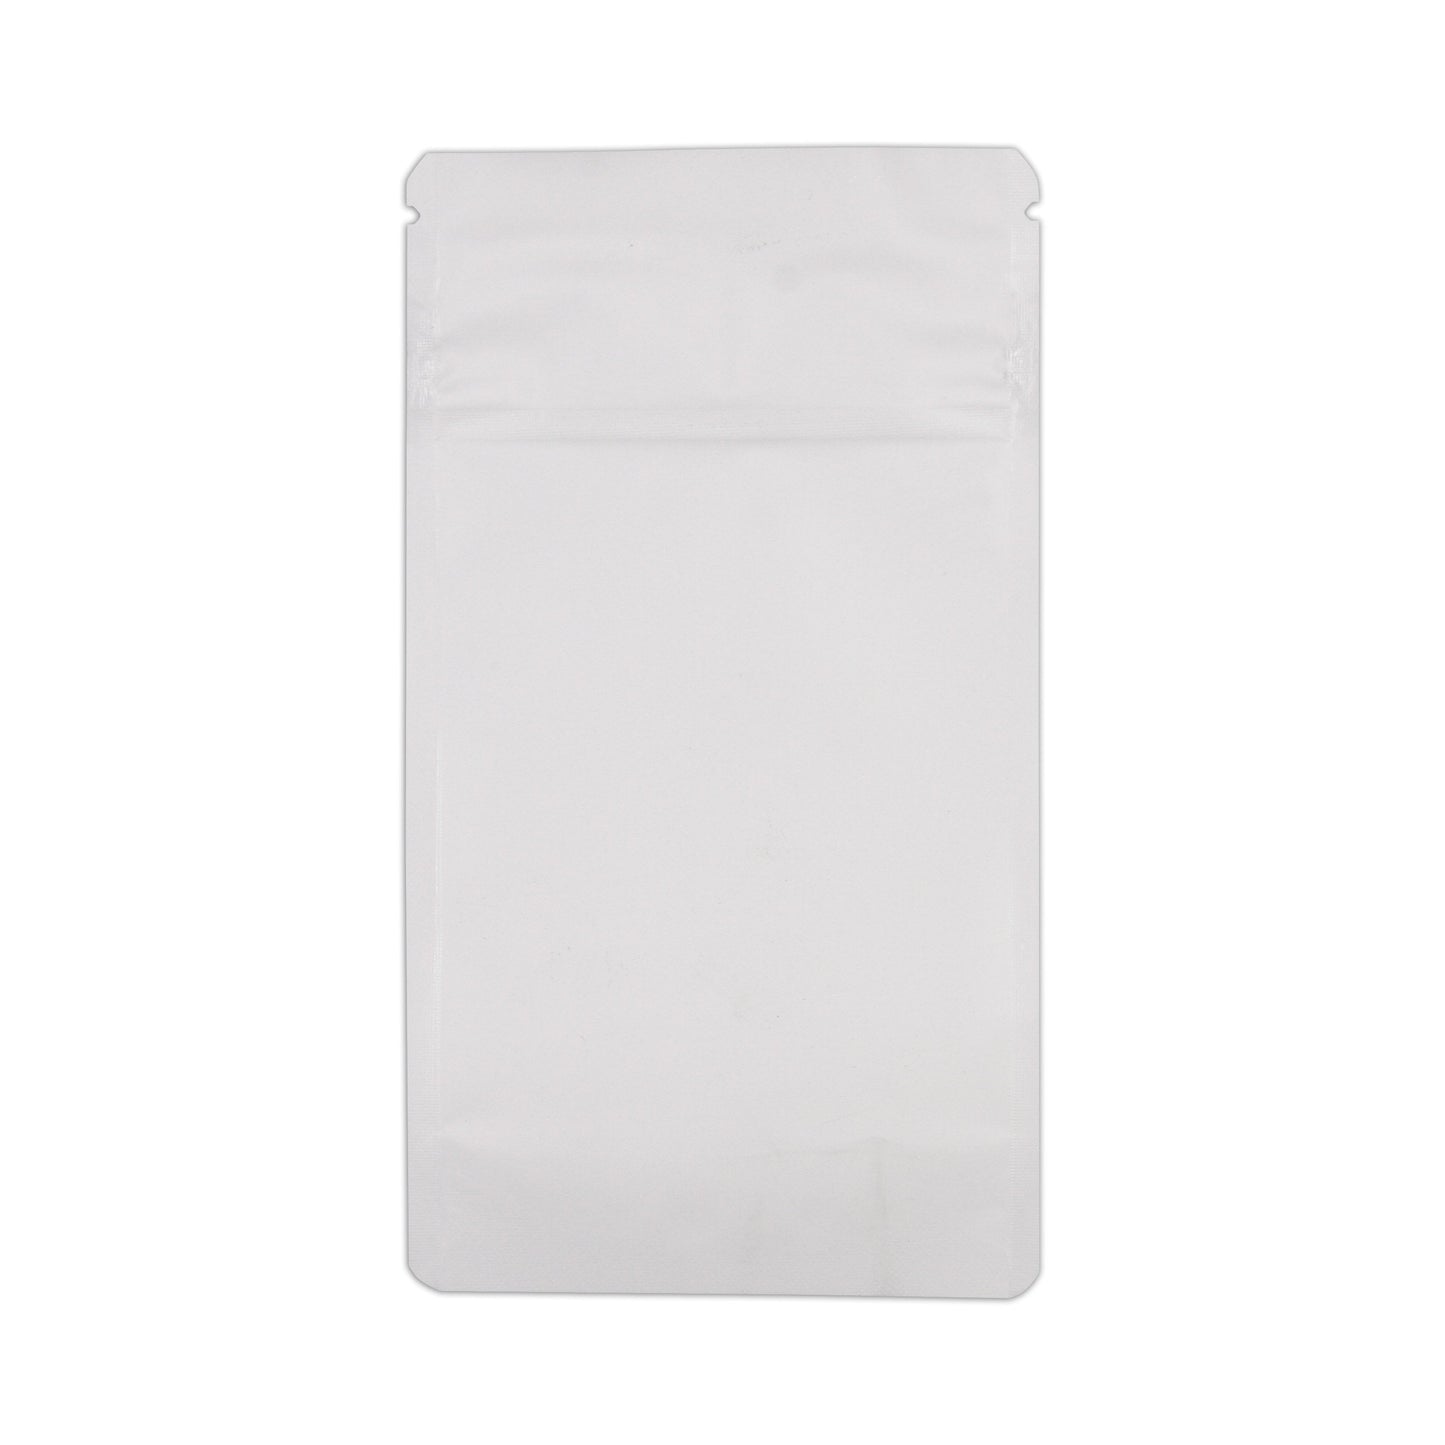 Bag King Child-Resistant Clear Front Green Zipper Bag (1/4th oz) Matte White